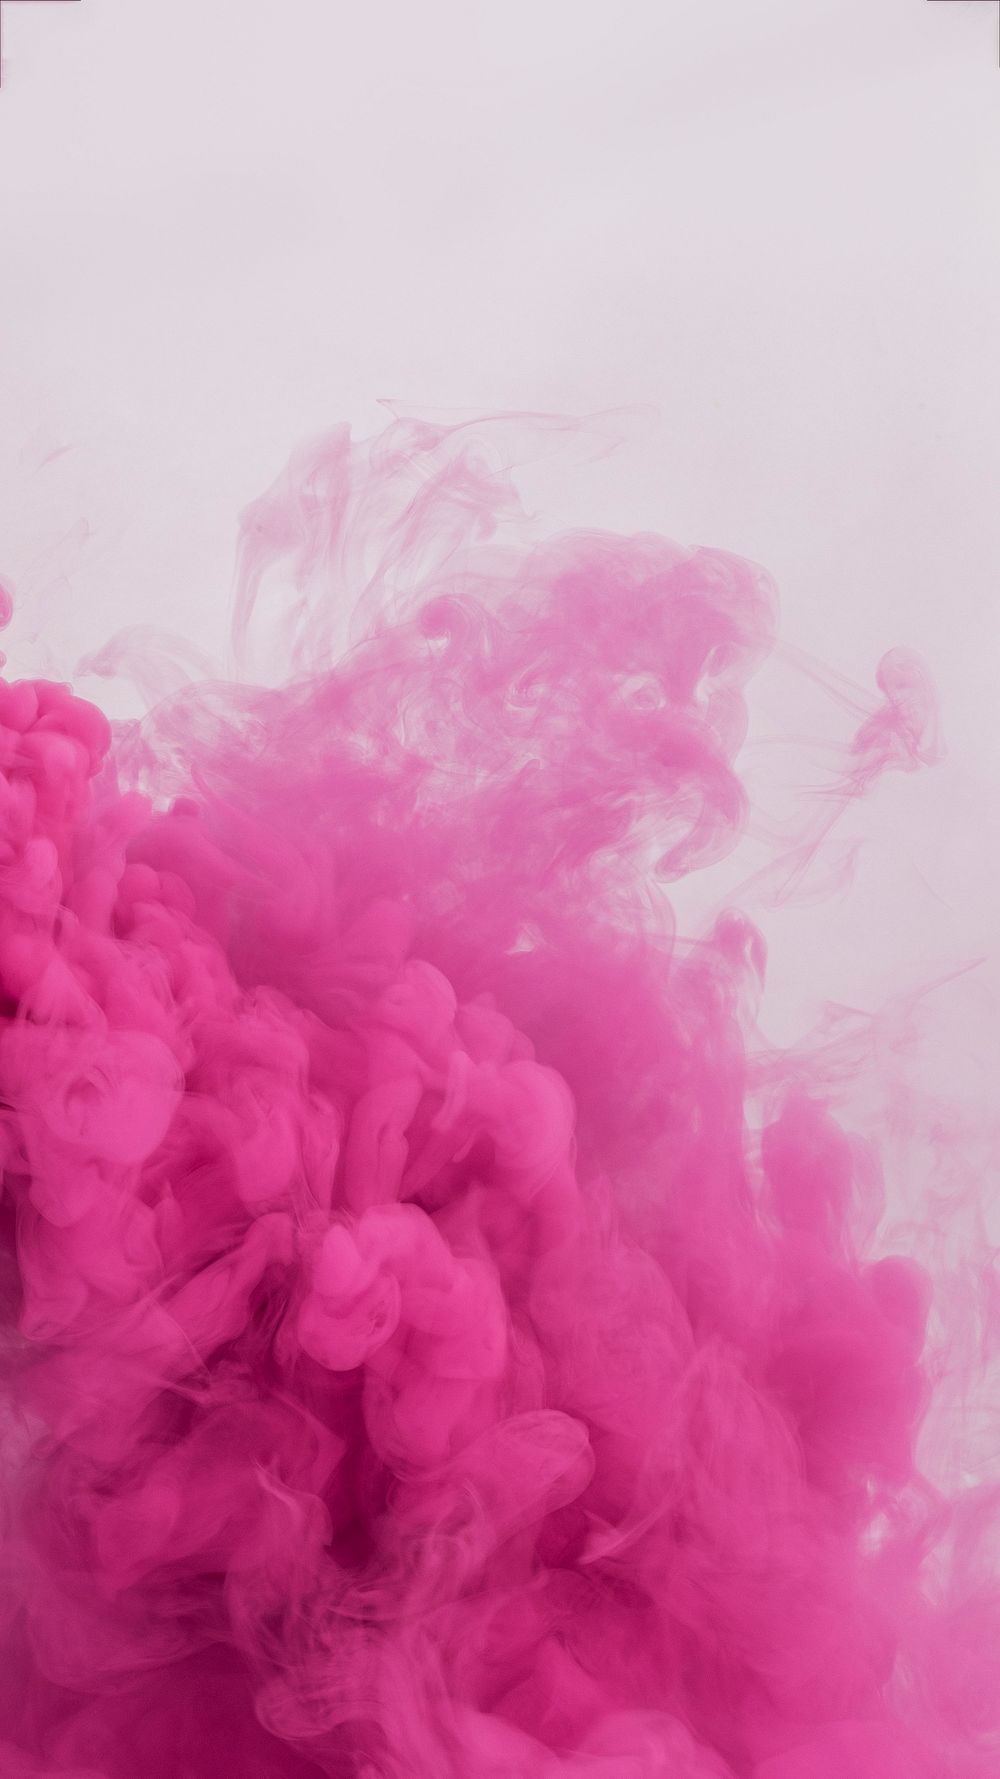 Pink smoke effect on a white | Premium Photo - rawpixel